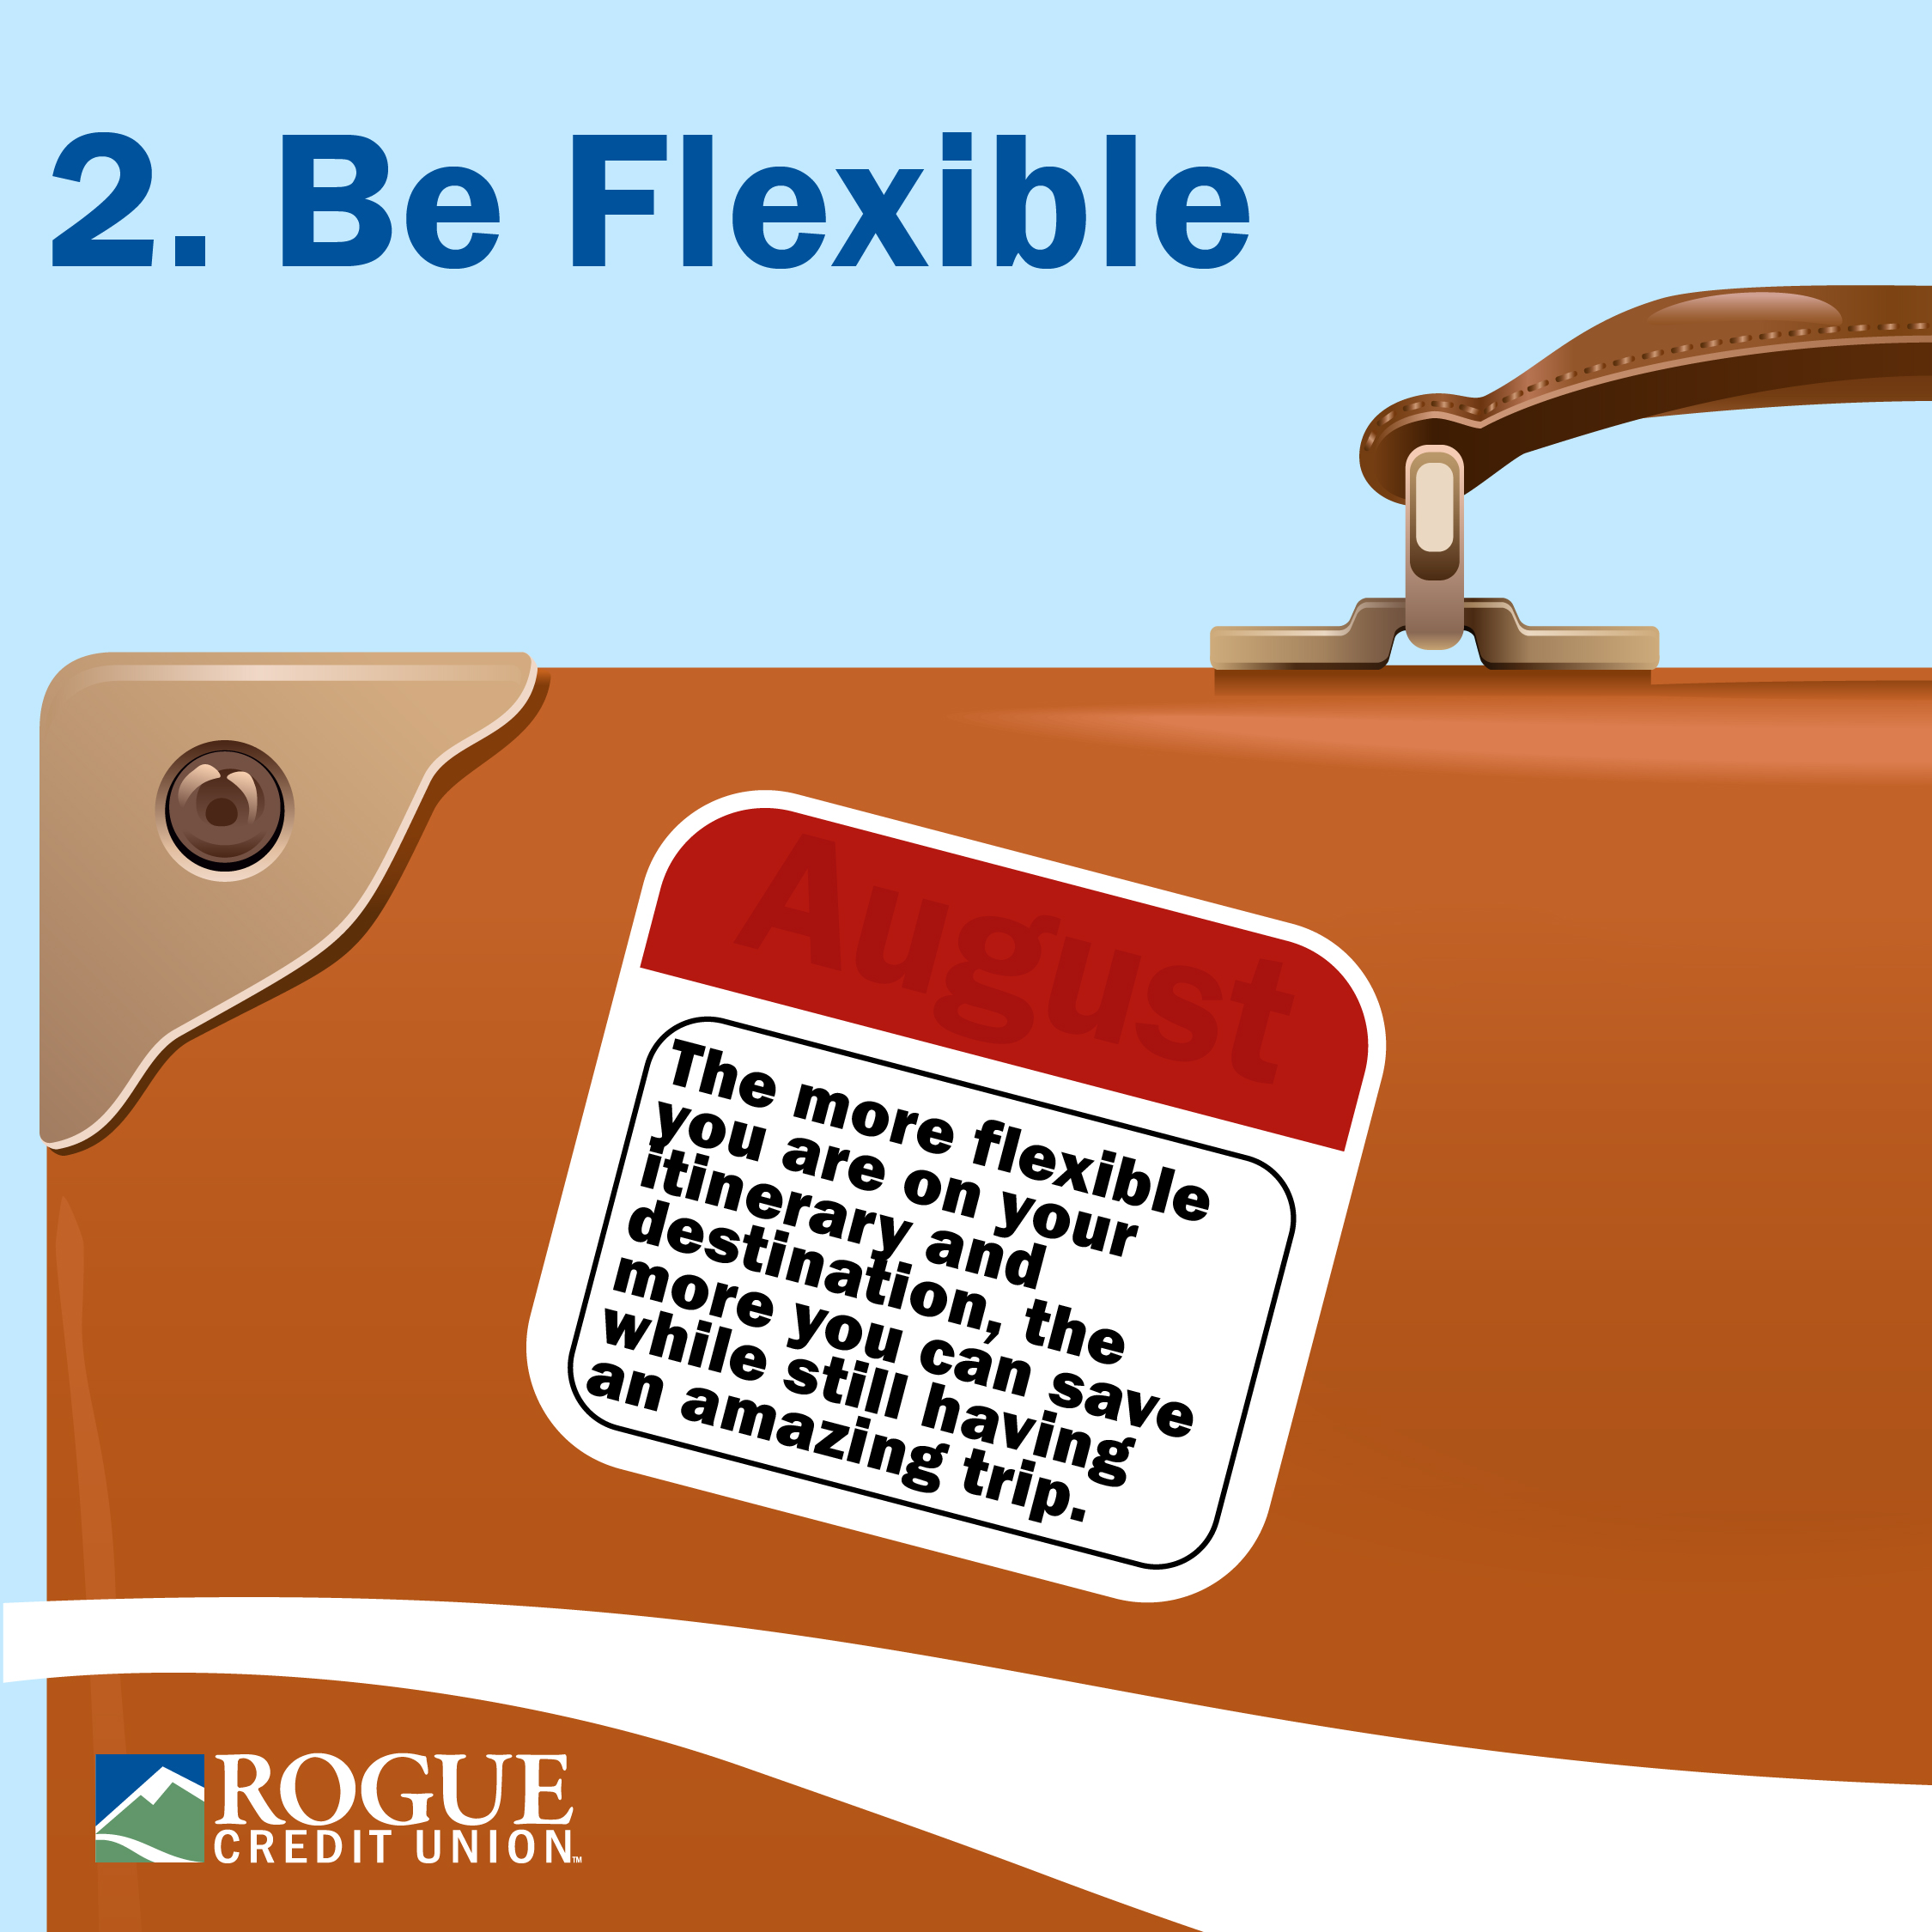 Be flexible